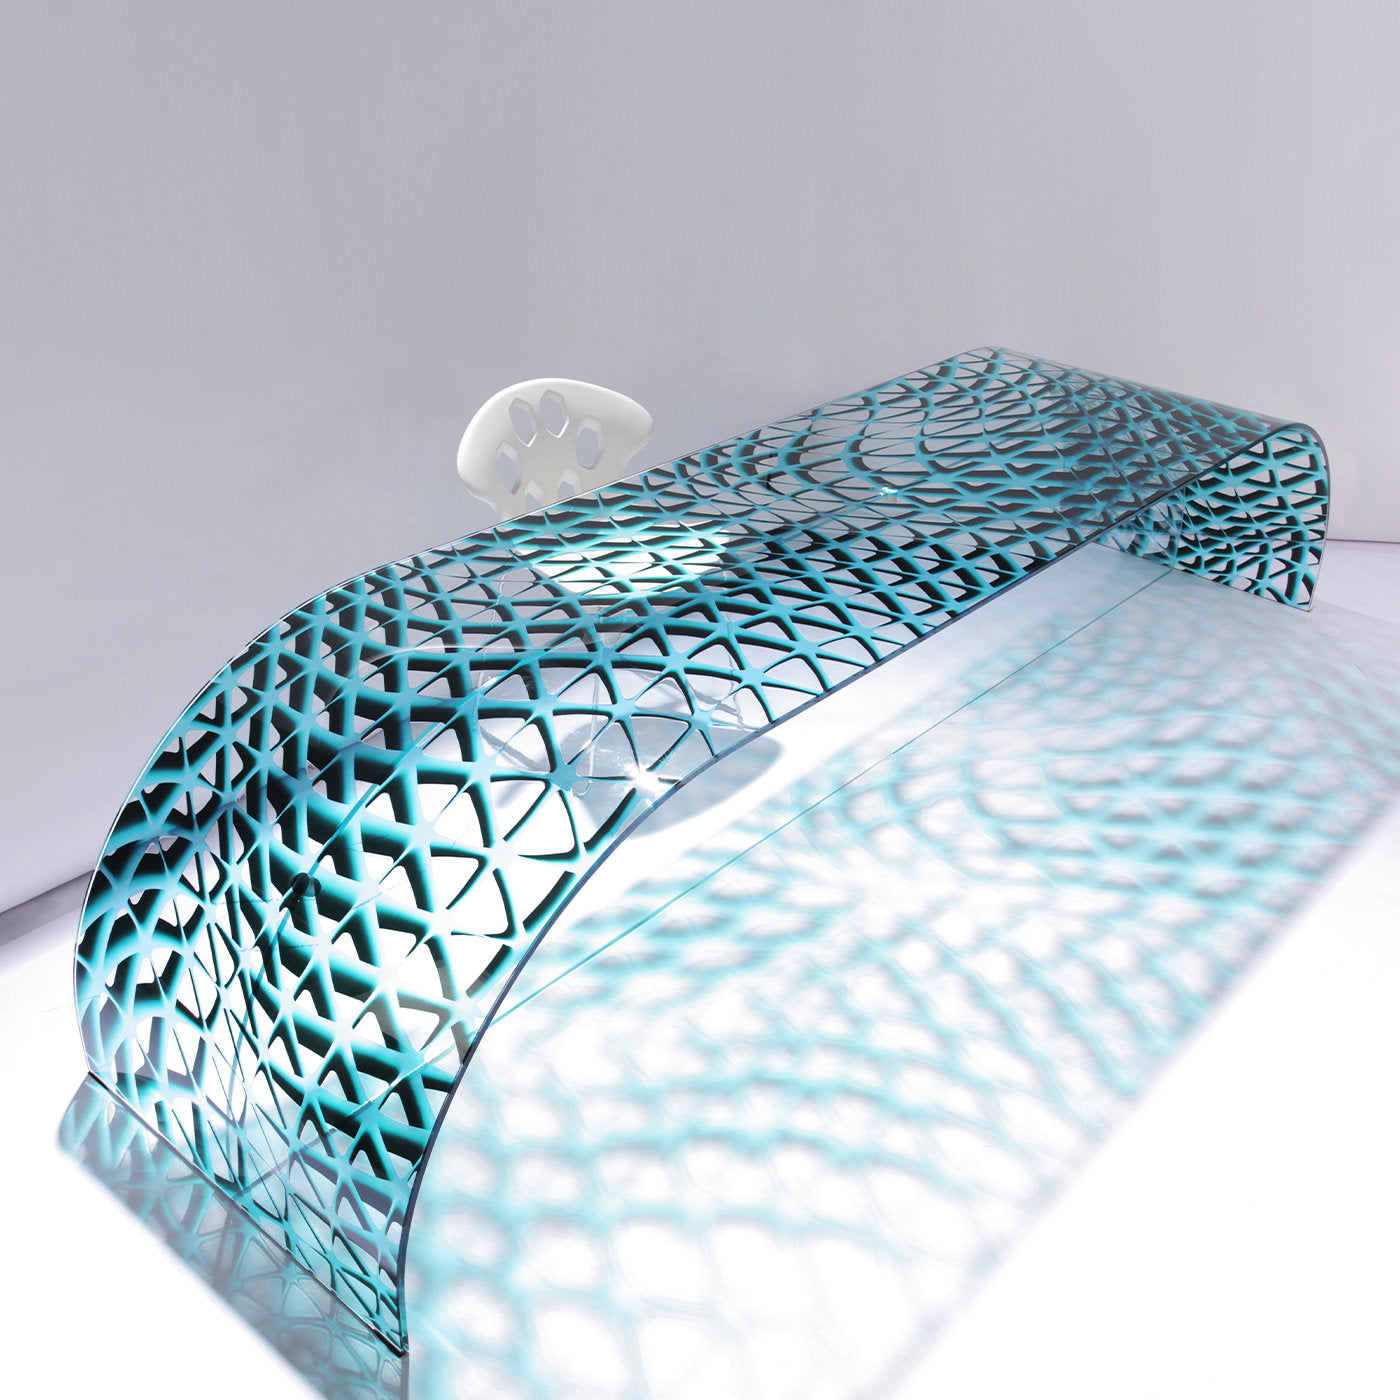 Nastro 3D Glass Table by Daniele Merini and Mac Stopà - Alternative view 2